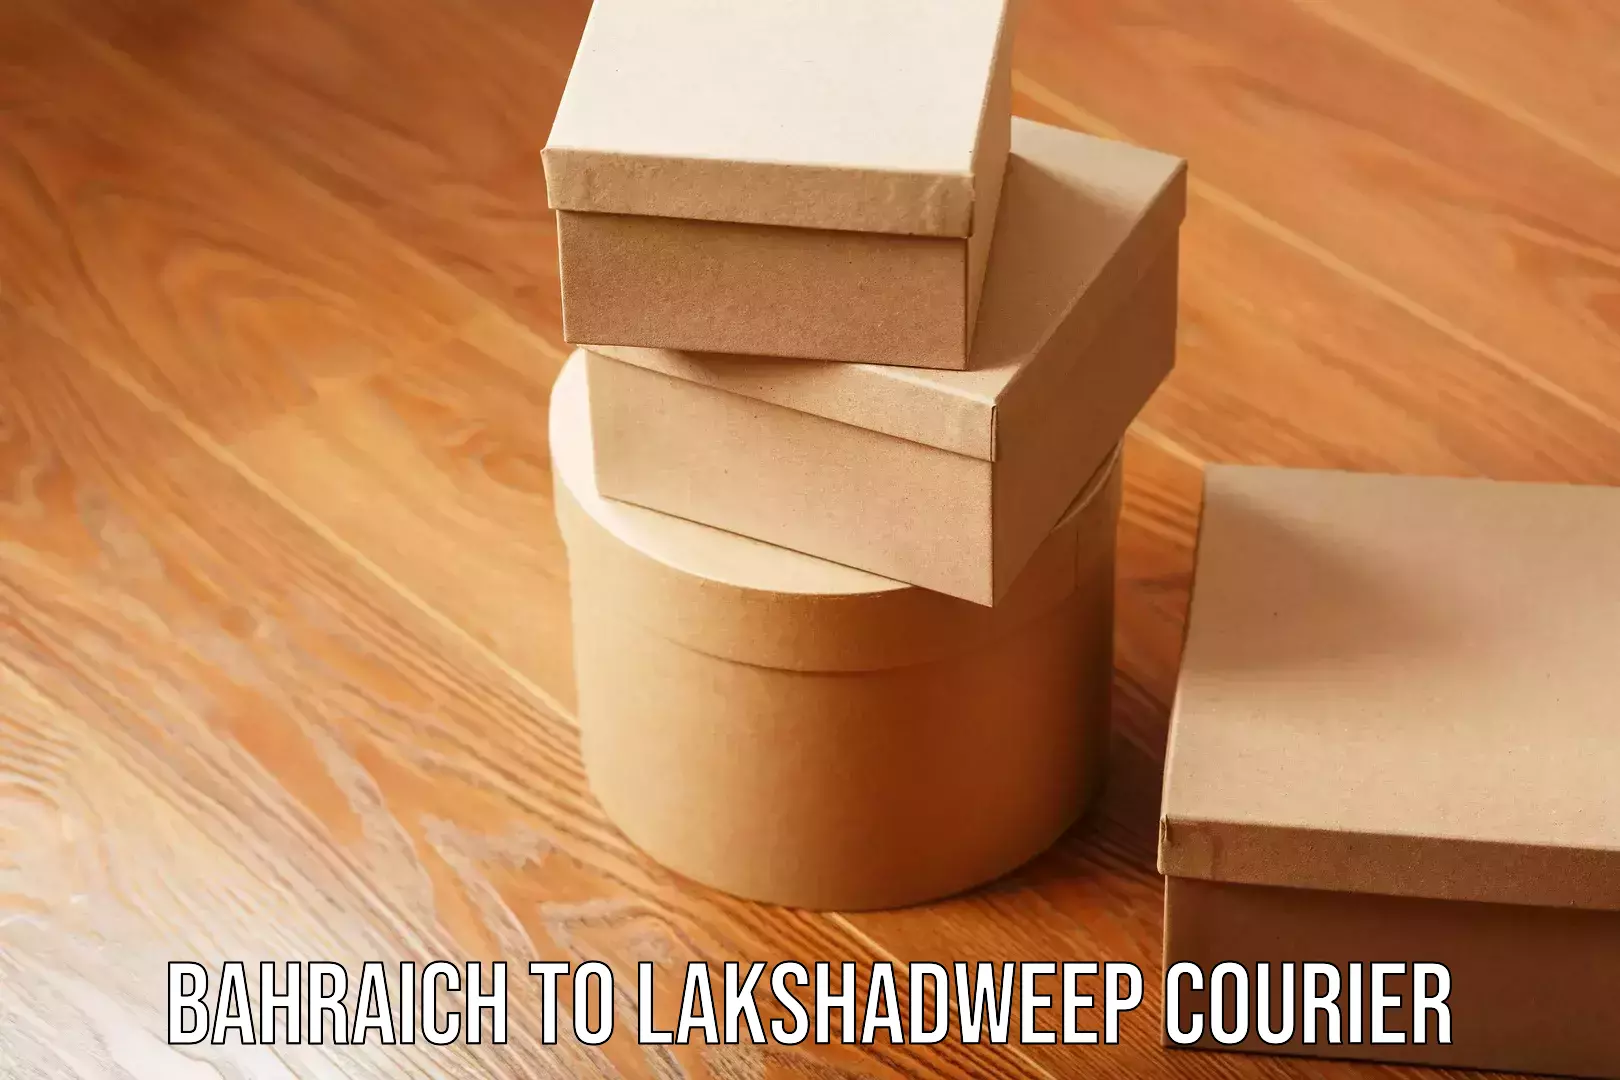 Express logistics providers Bahraich to Lakshadweep